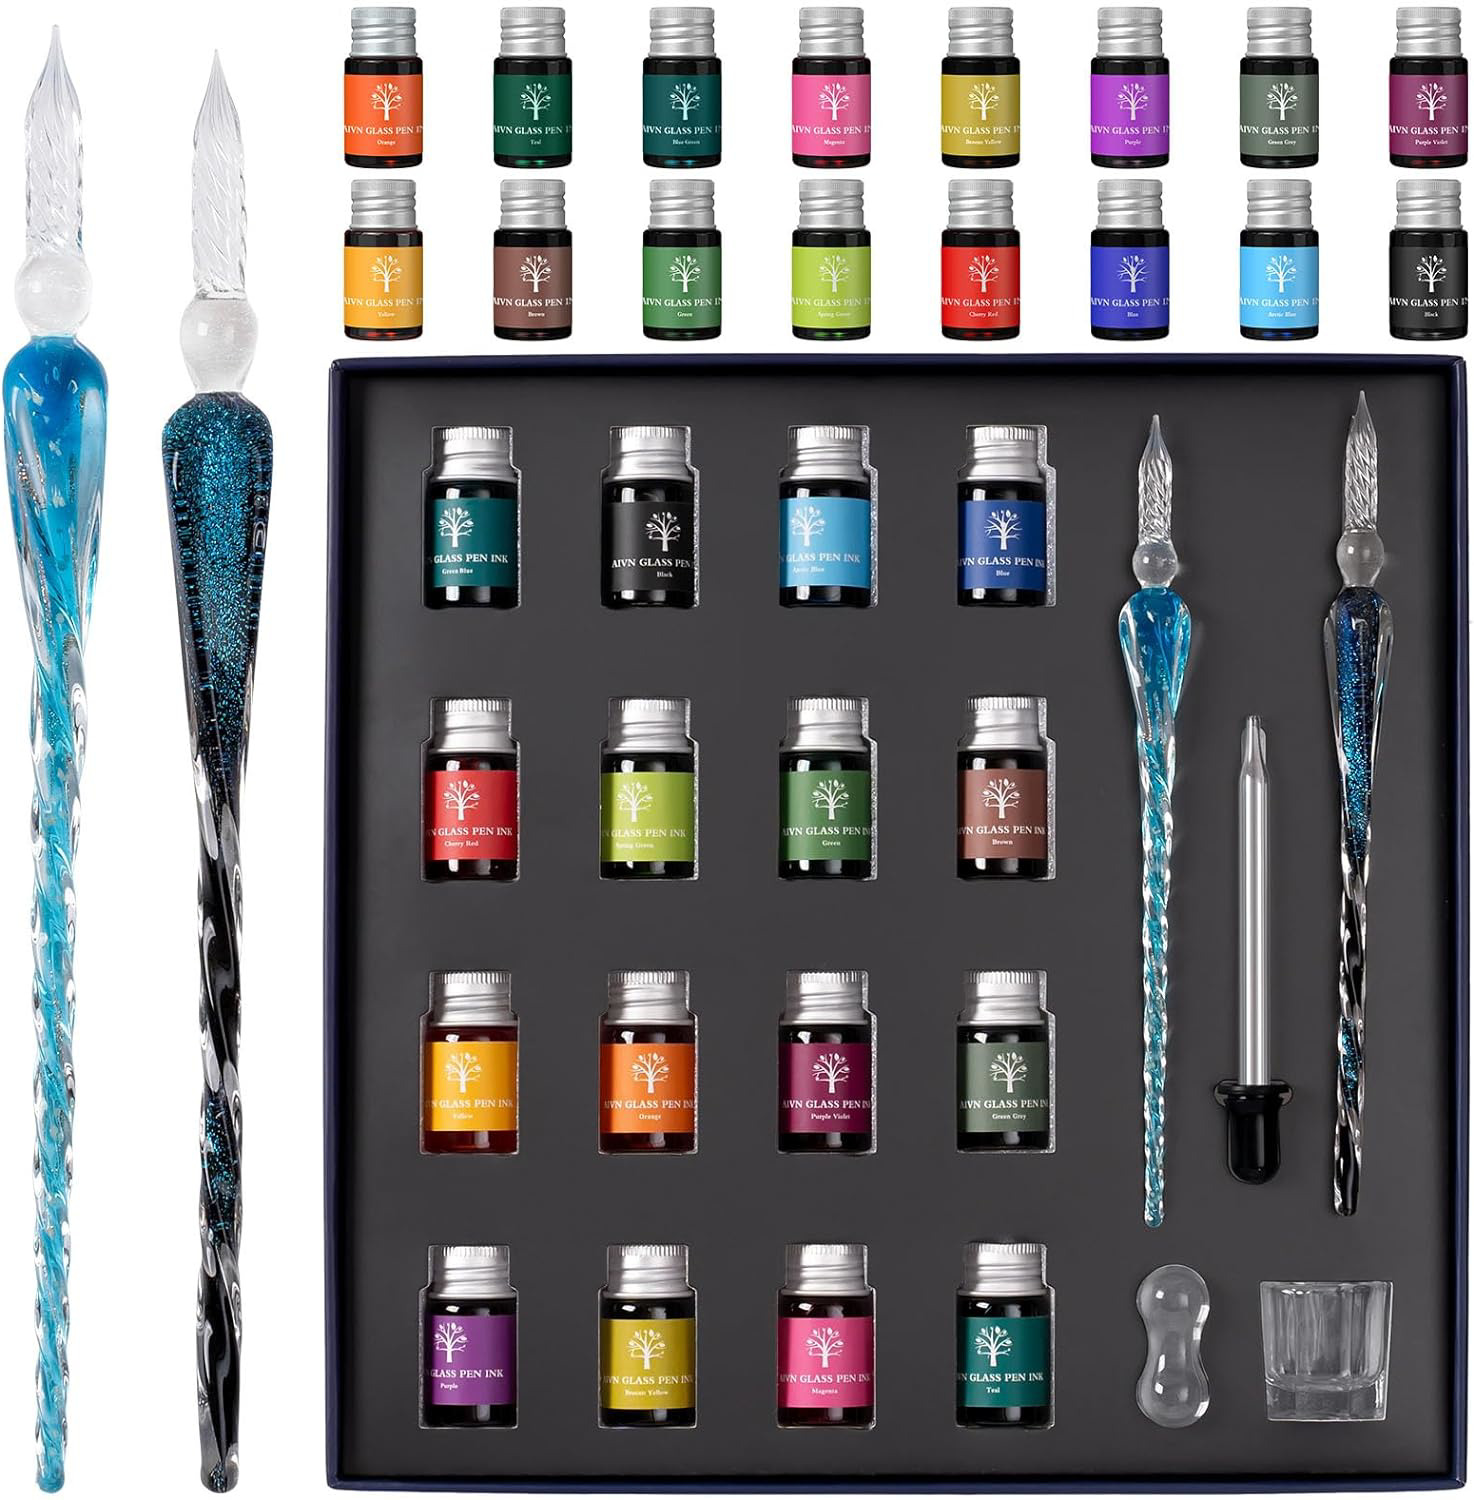 AIVN Glass Dip Pen Set - 19 Pieces of Calligraphy Pens Set. Includes 2 Glass Pen